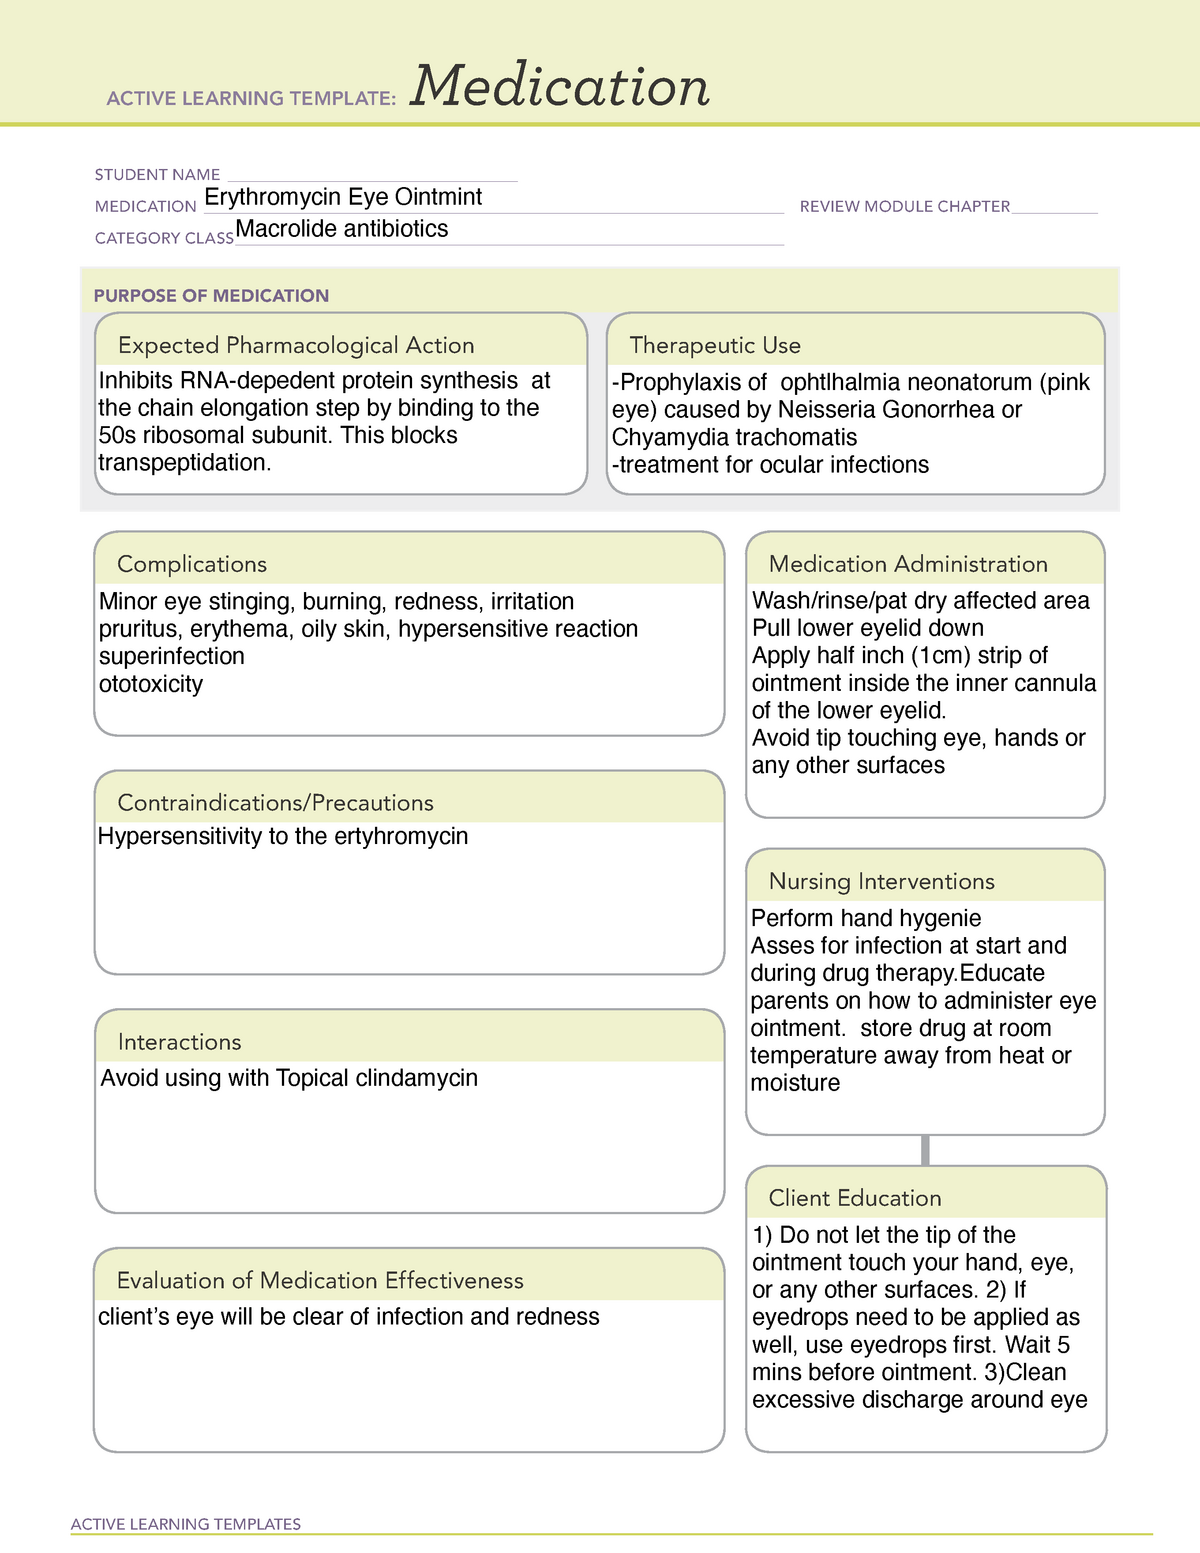 erythomyocin-ointment-active-learning-templates-medication-student-name-studocu